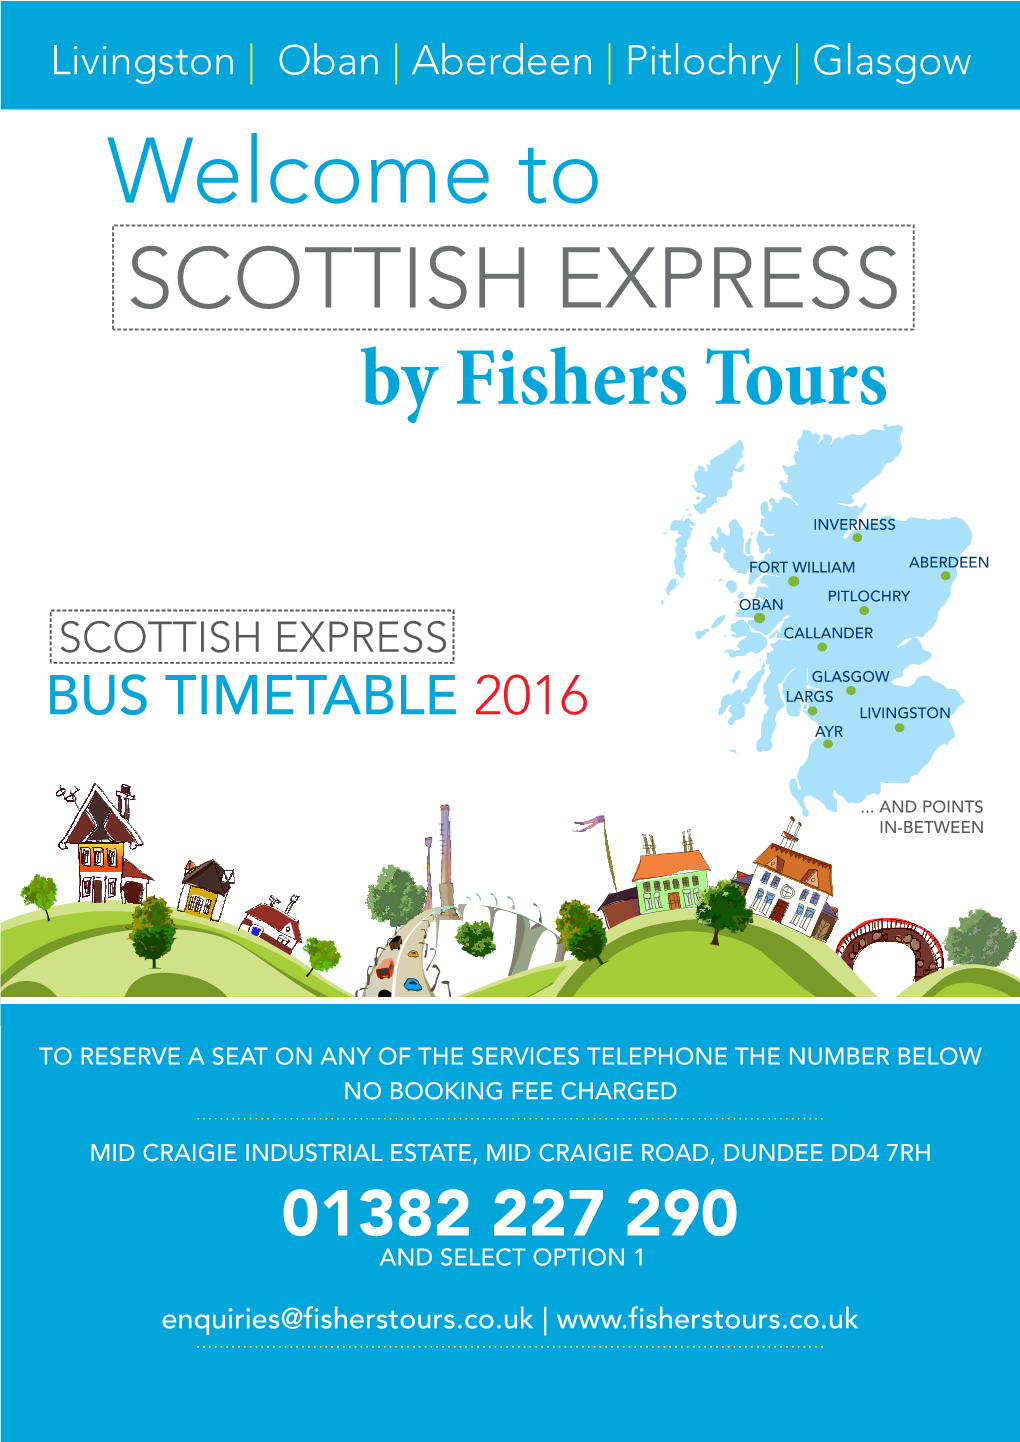 Bus Timetable 2016 Livingston Ayr